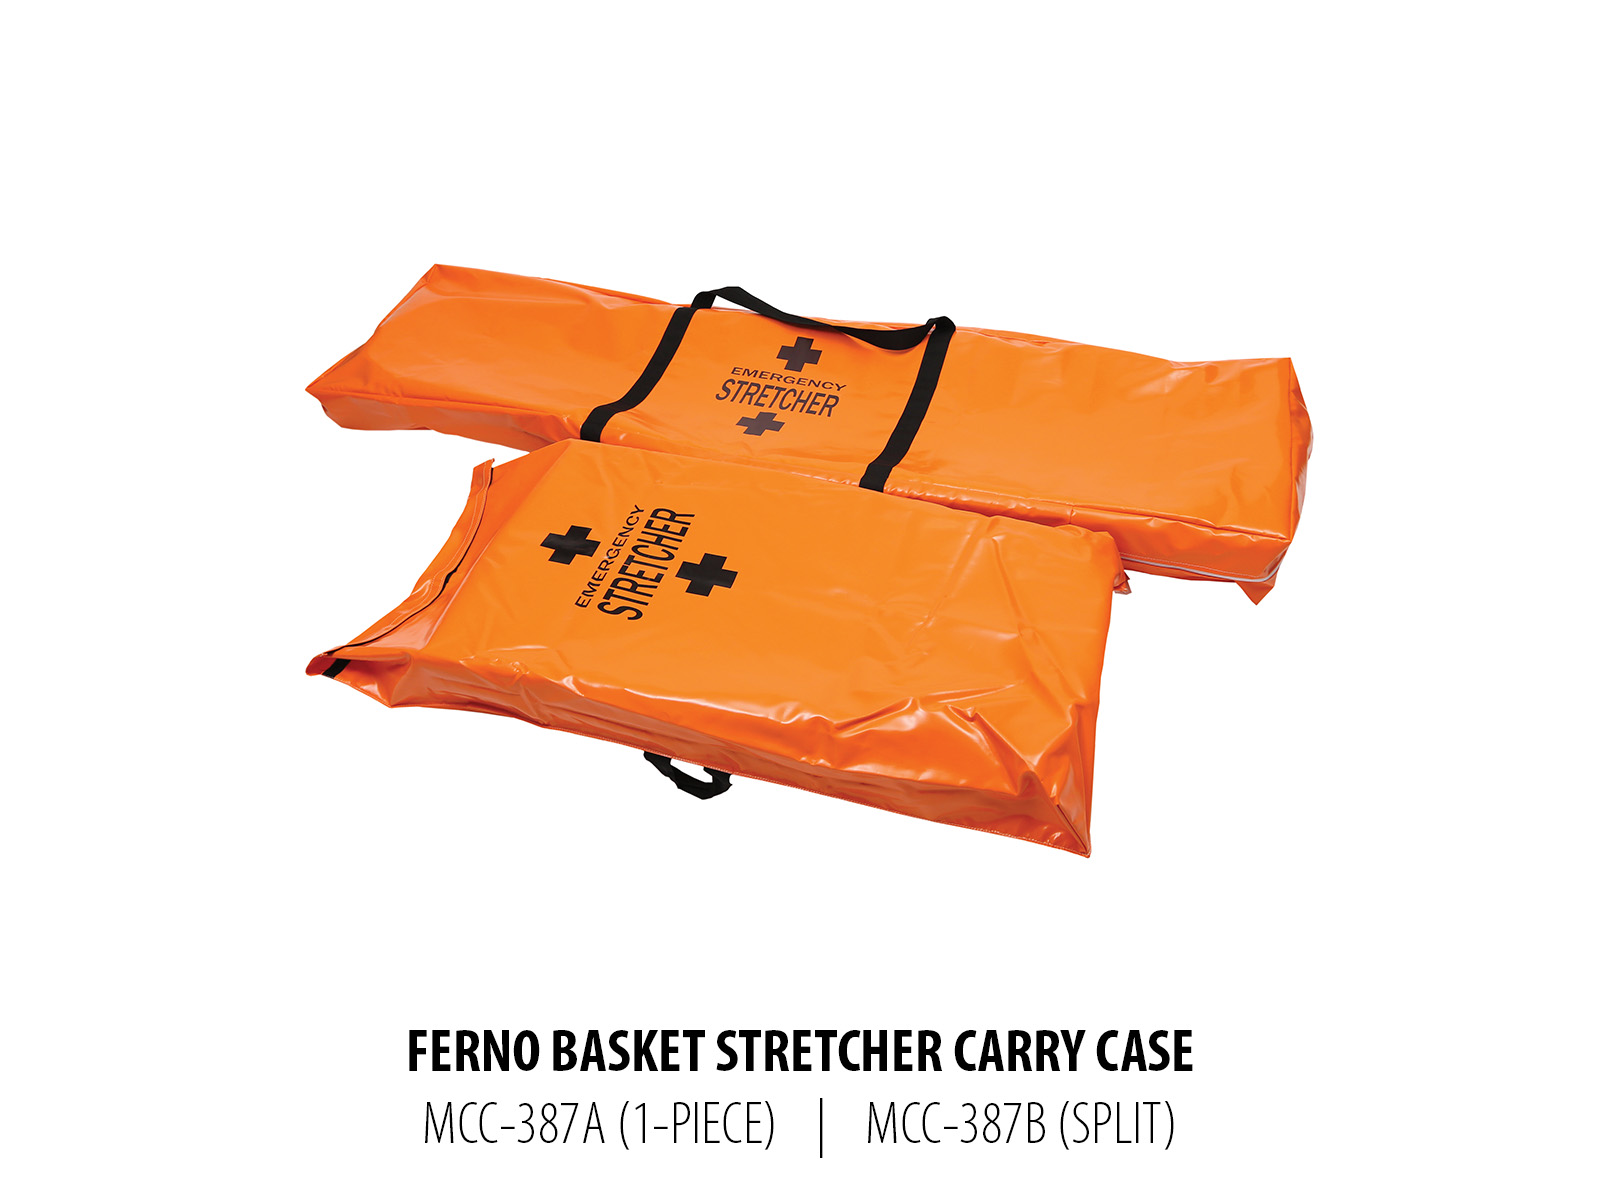 Ferno-Basket-Stretcher-Carry-Cases.jpg